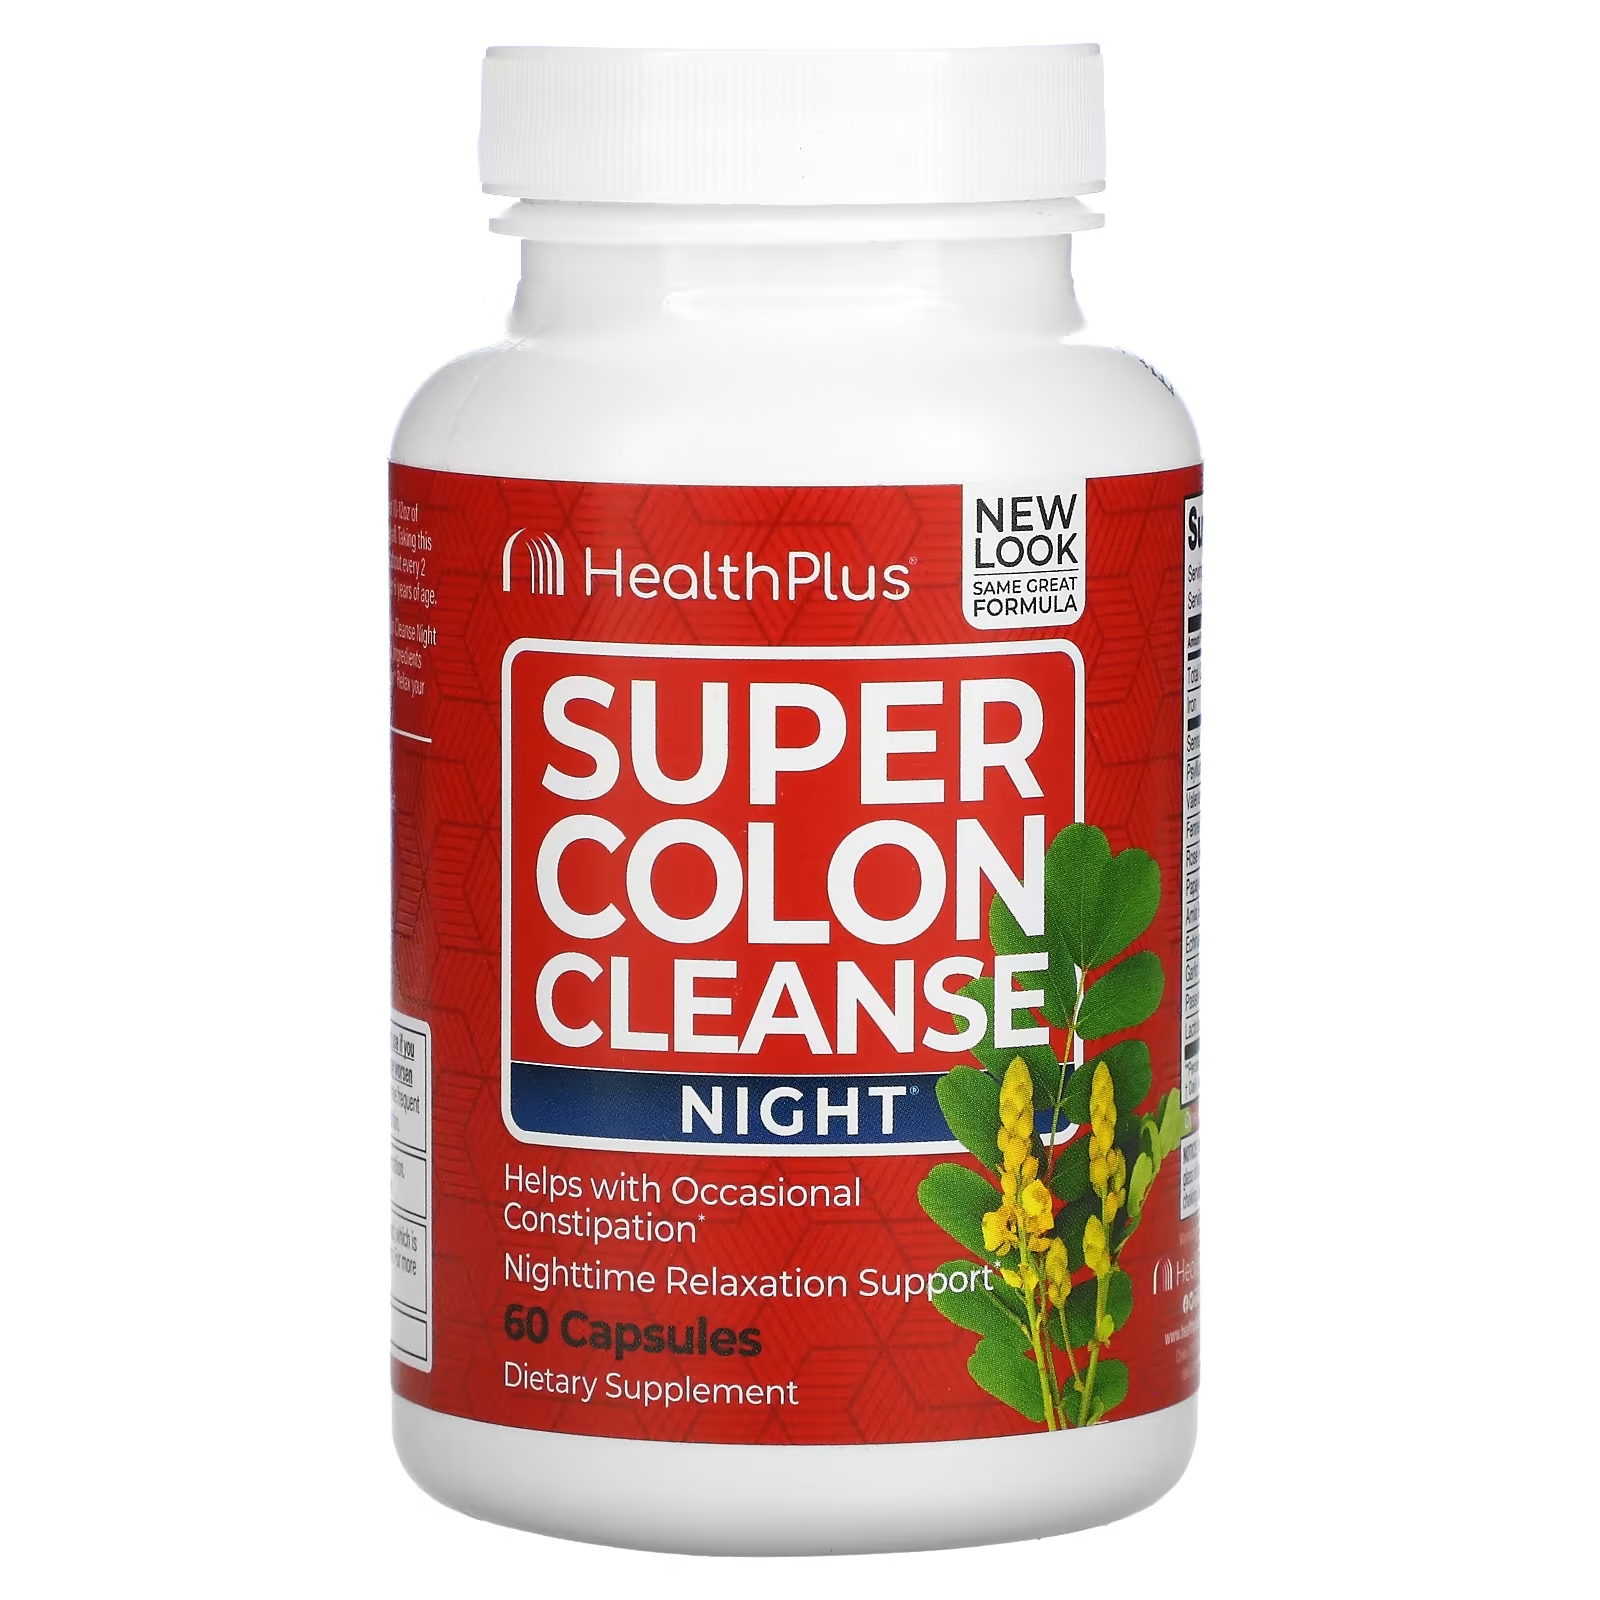 Health Plus Super Colon Cleanse средство для ночной очистки кишечника, 60 капсул health plus добавка для очистки печени 60 капсул